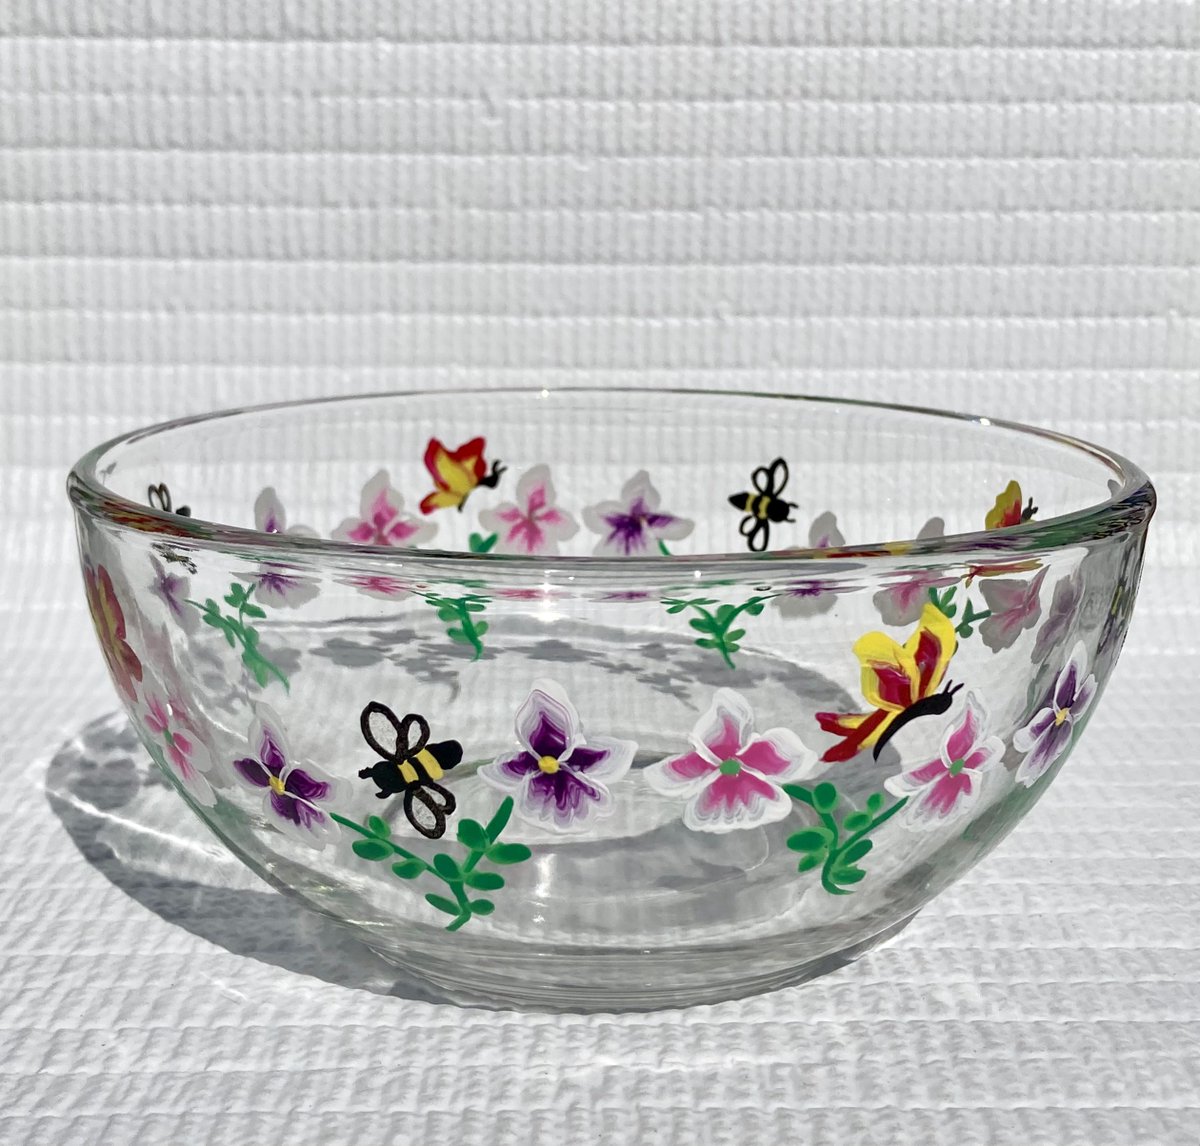 Floral candy dish etsy.com/listing/169454… #bowl #handpaintedbowl #candydish #SMILEtt23 #CraftBizParty #homedecor #flowerlovergift #etsy #MothersDayGifts